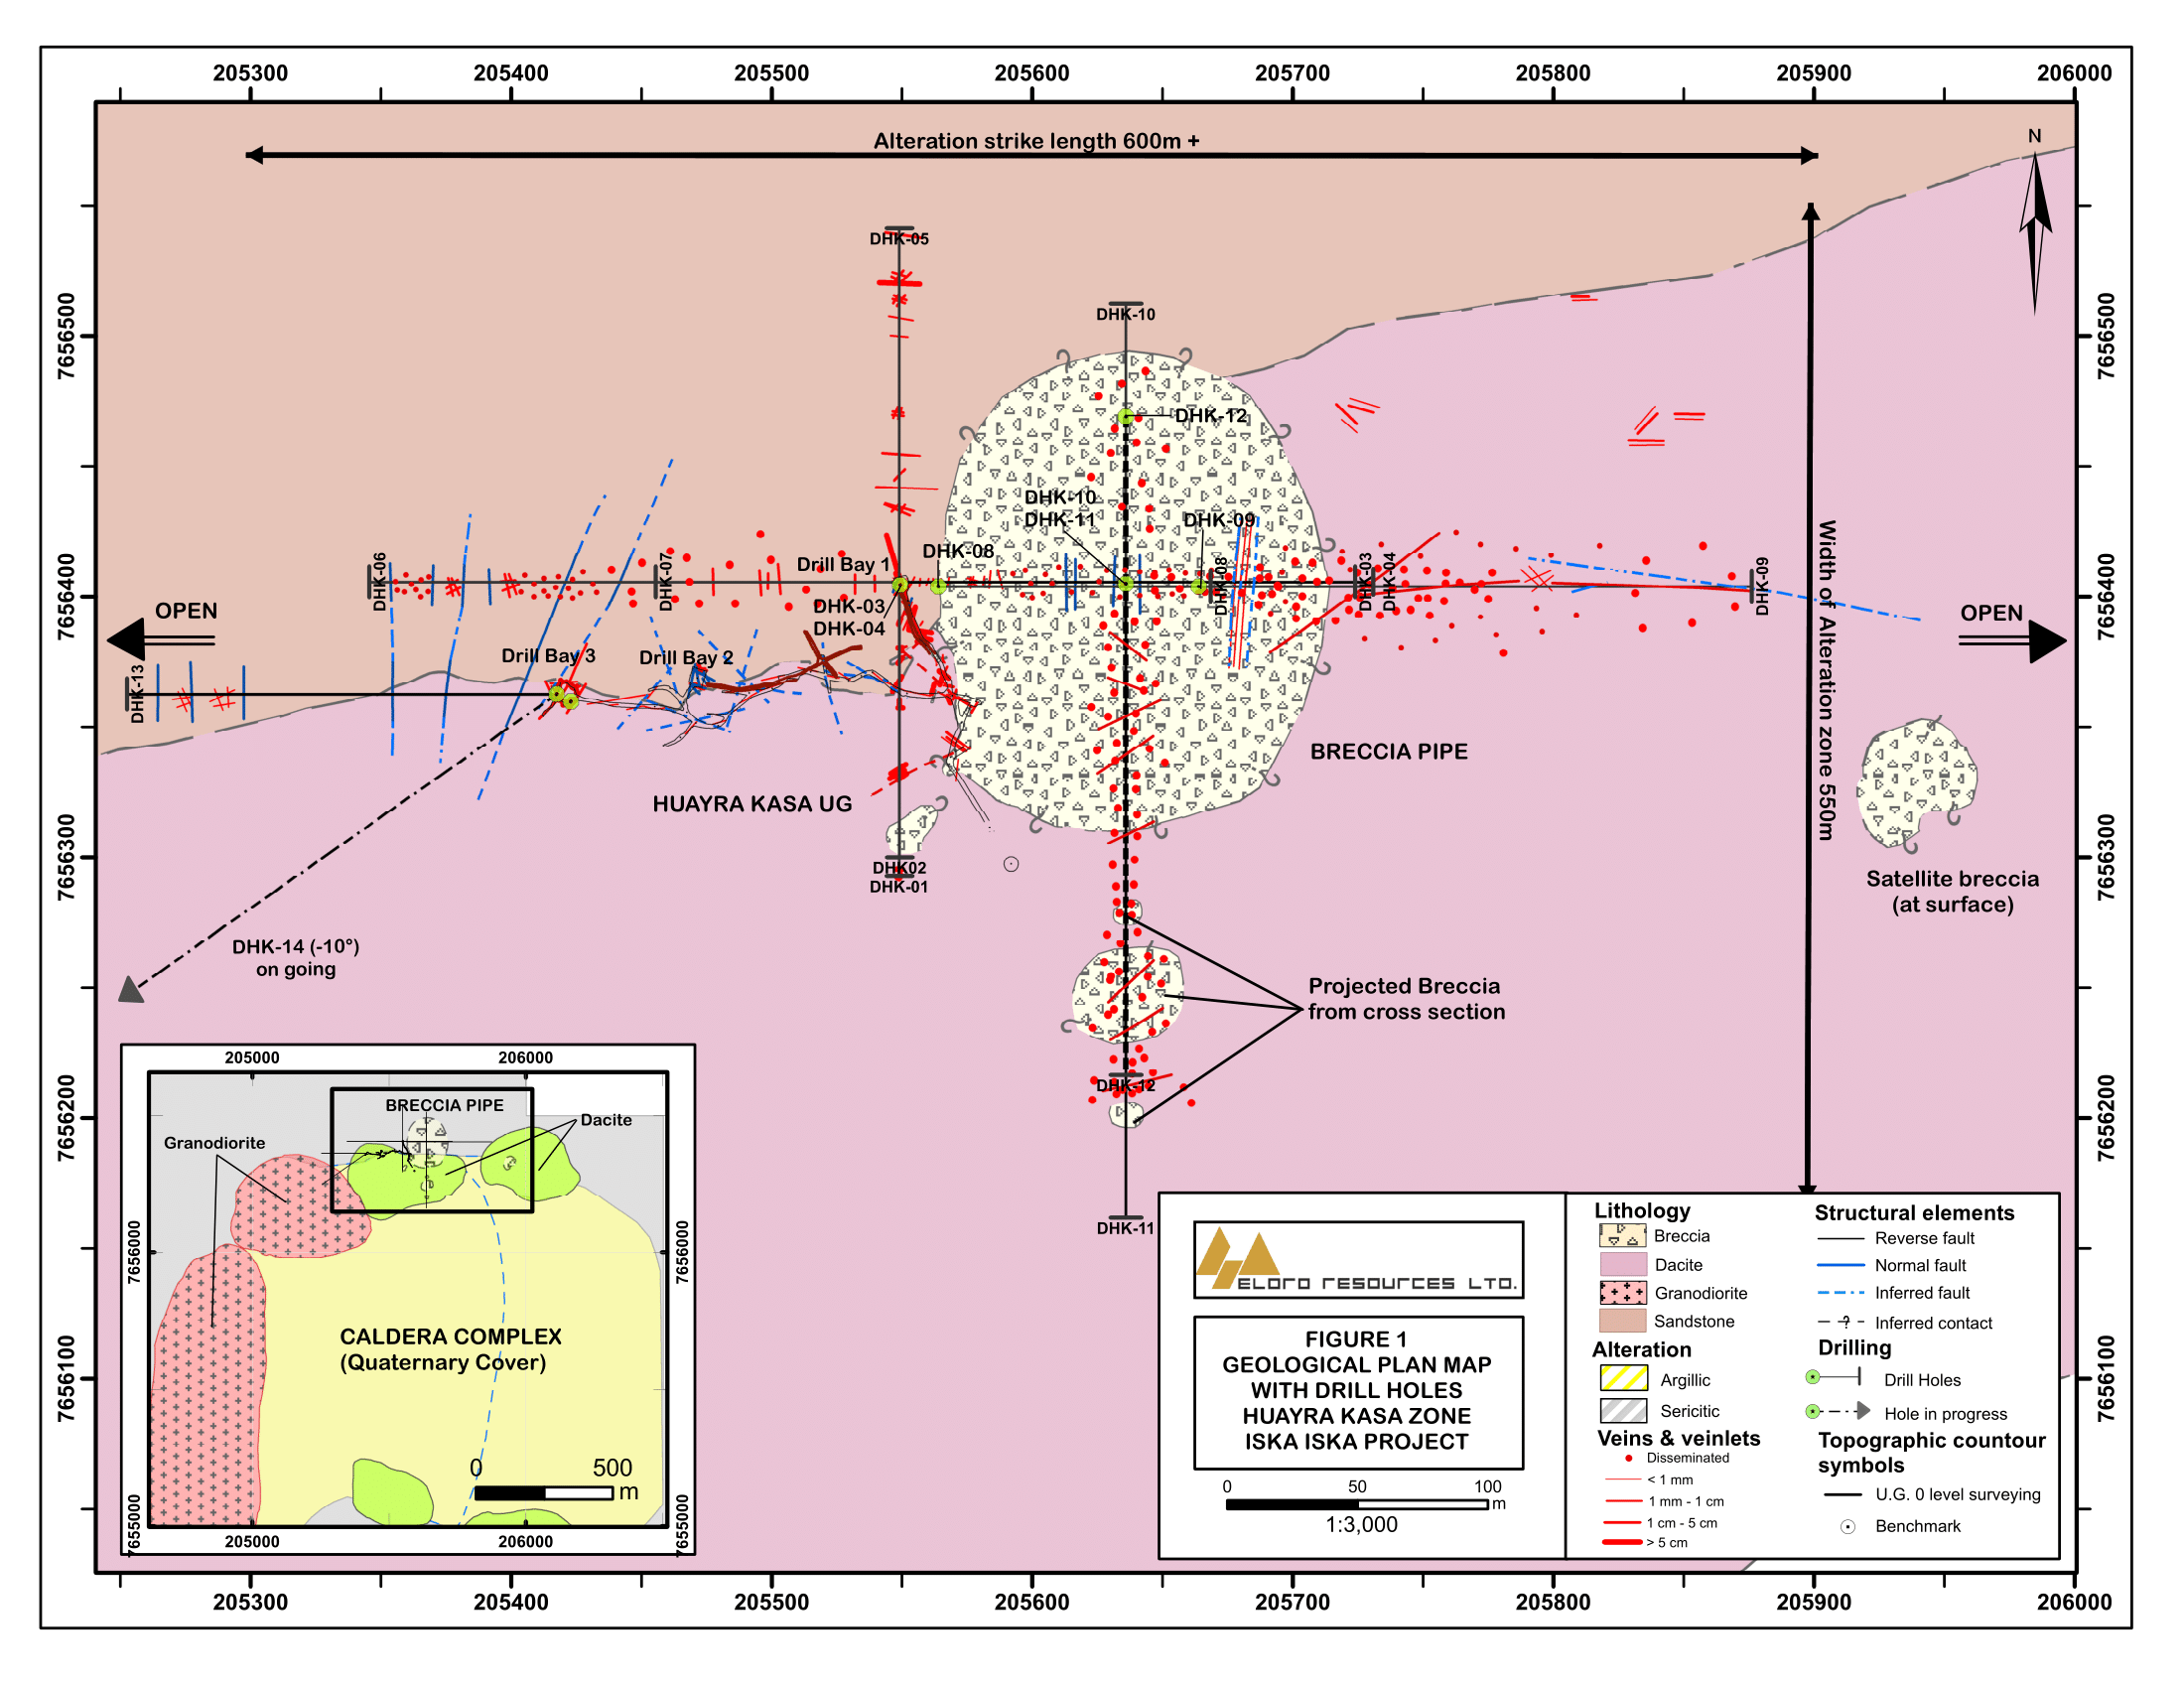 Geological Plan Map with Drill Holes, Huayra Kasa Zone, Iska Iska Project